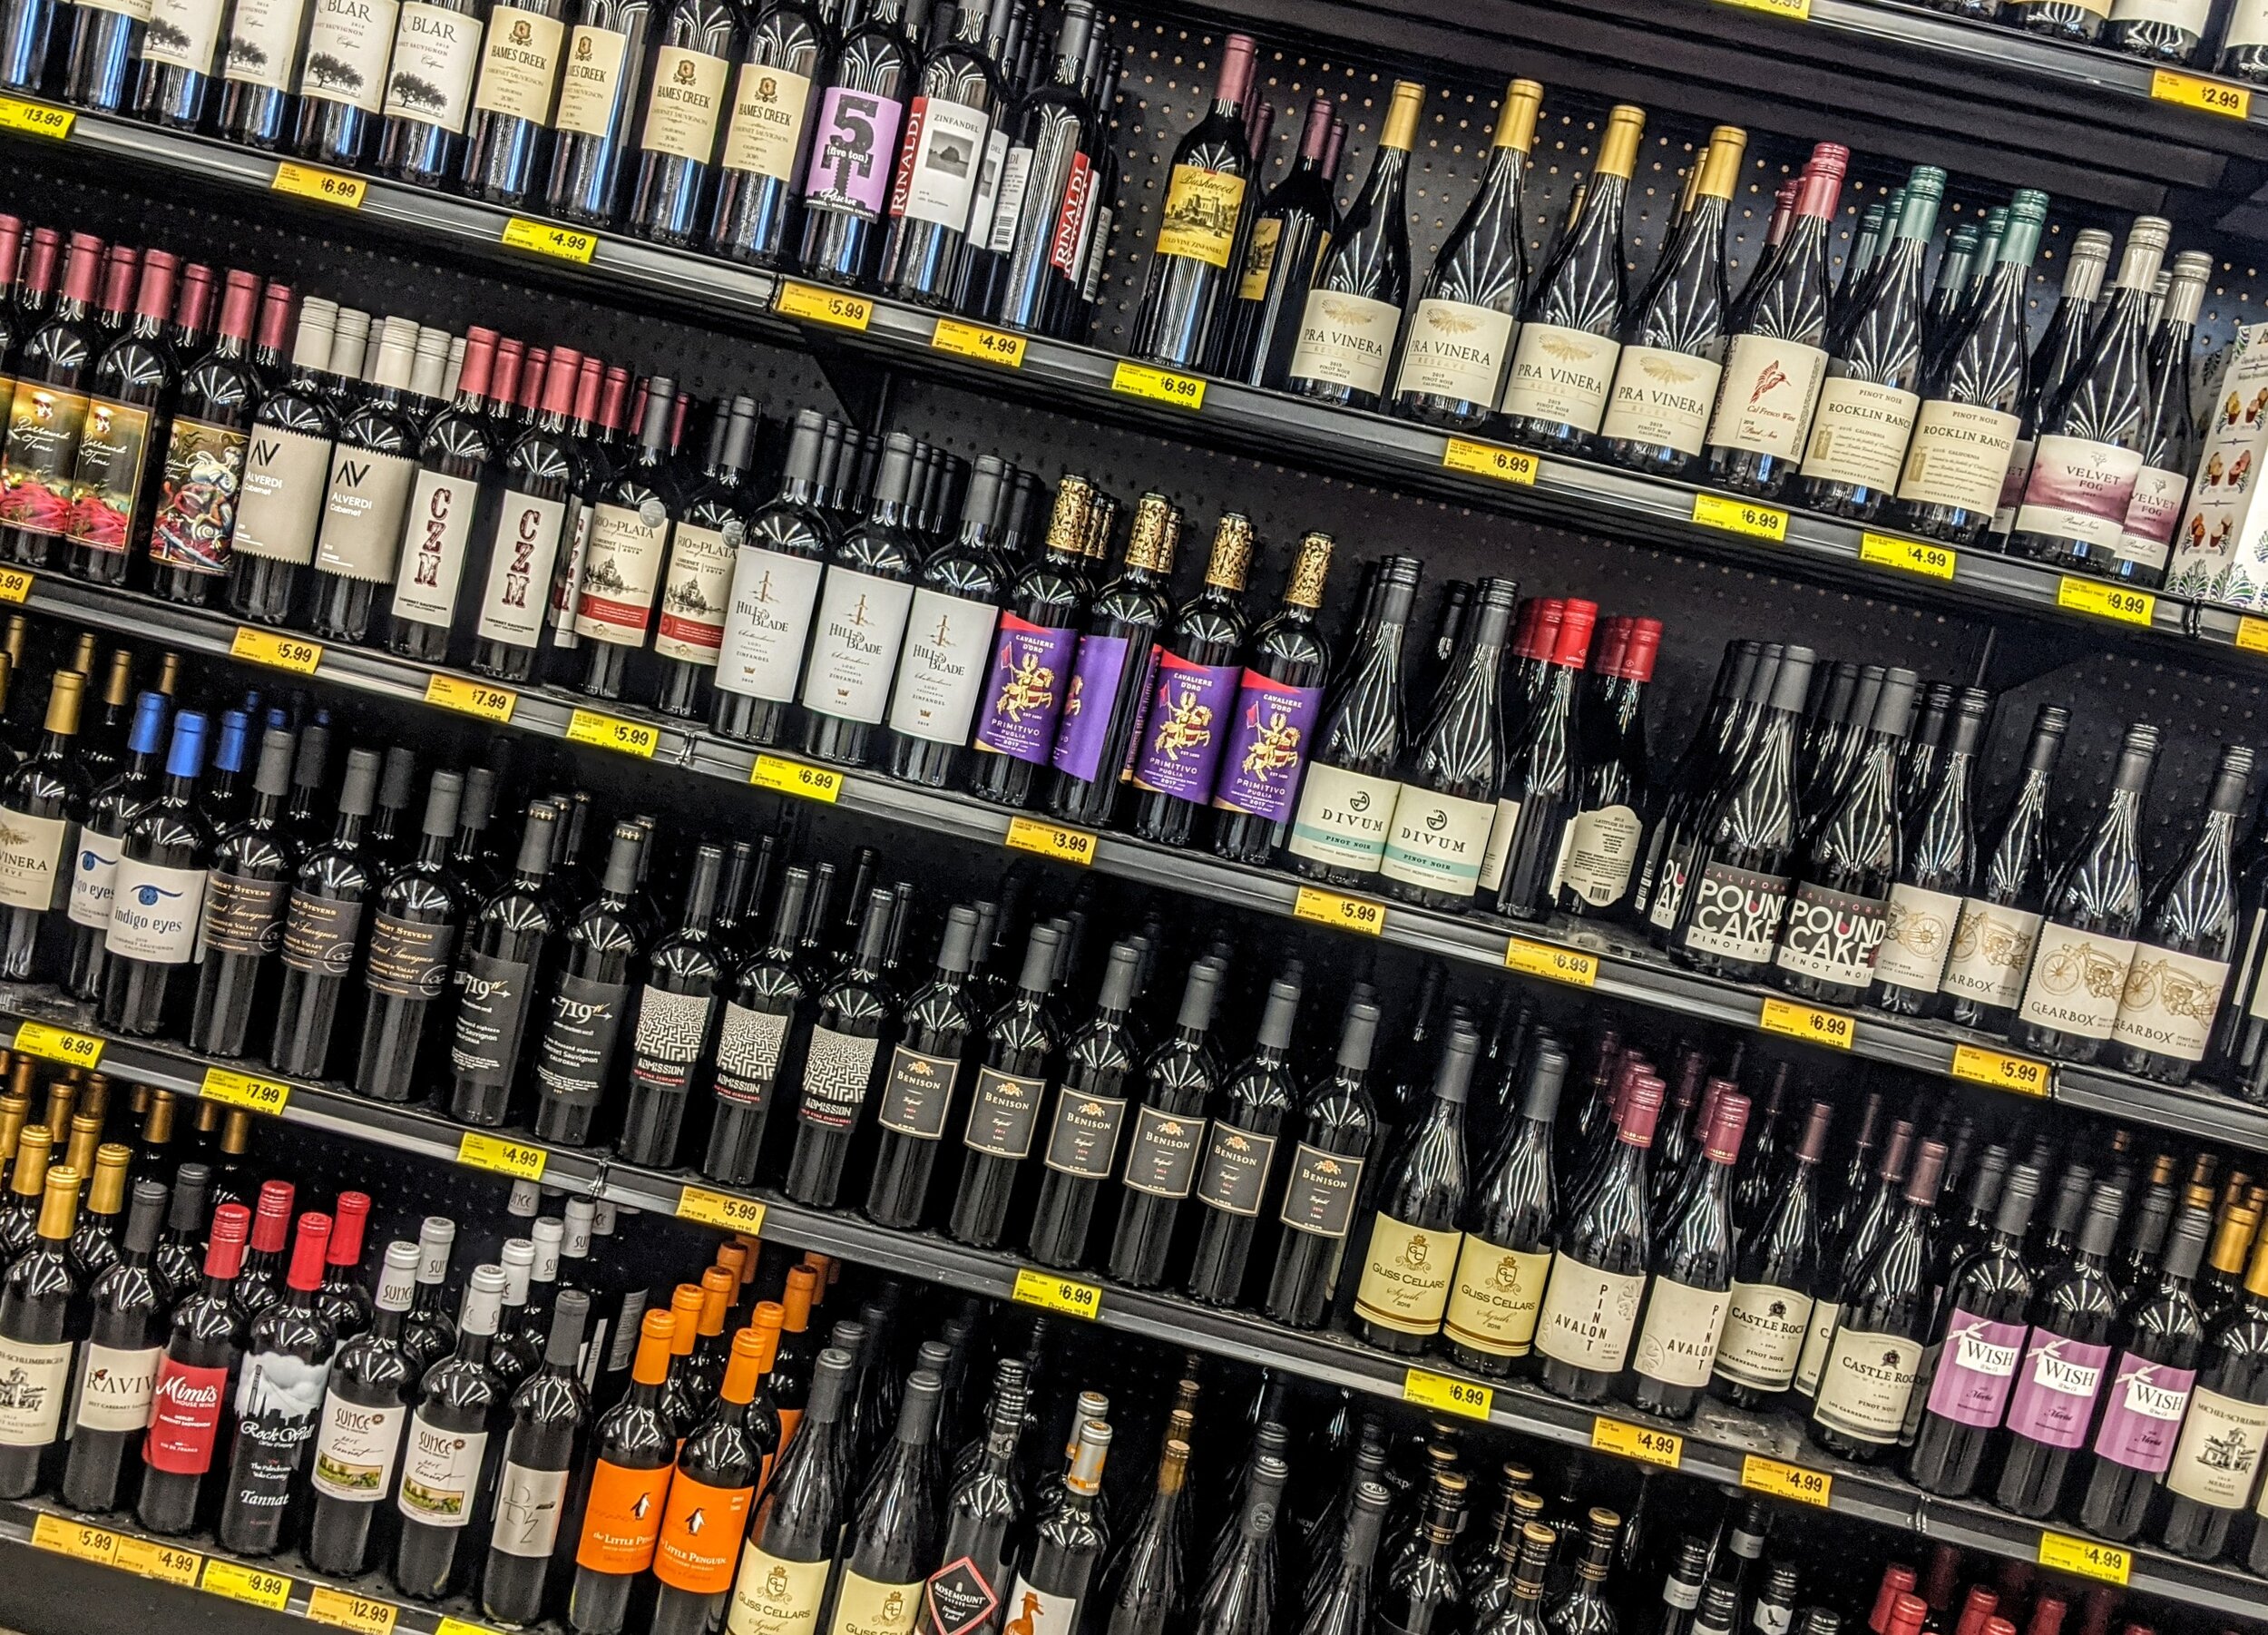 moscato vs Chardonnay - wine store shelf